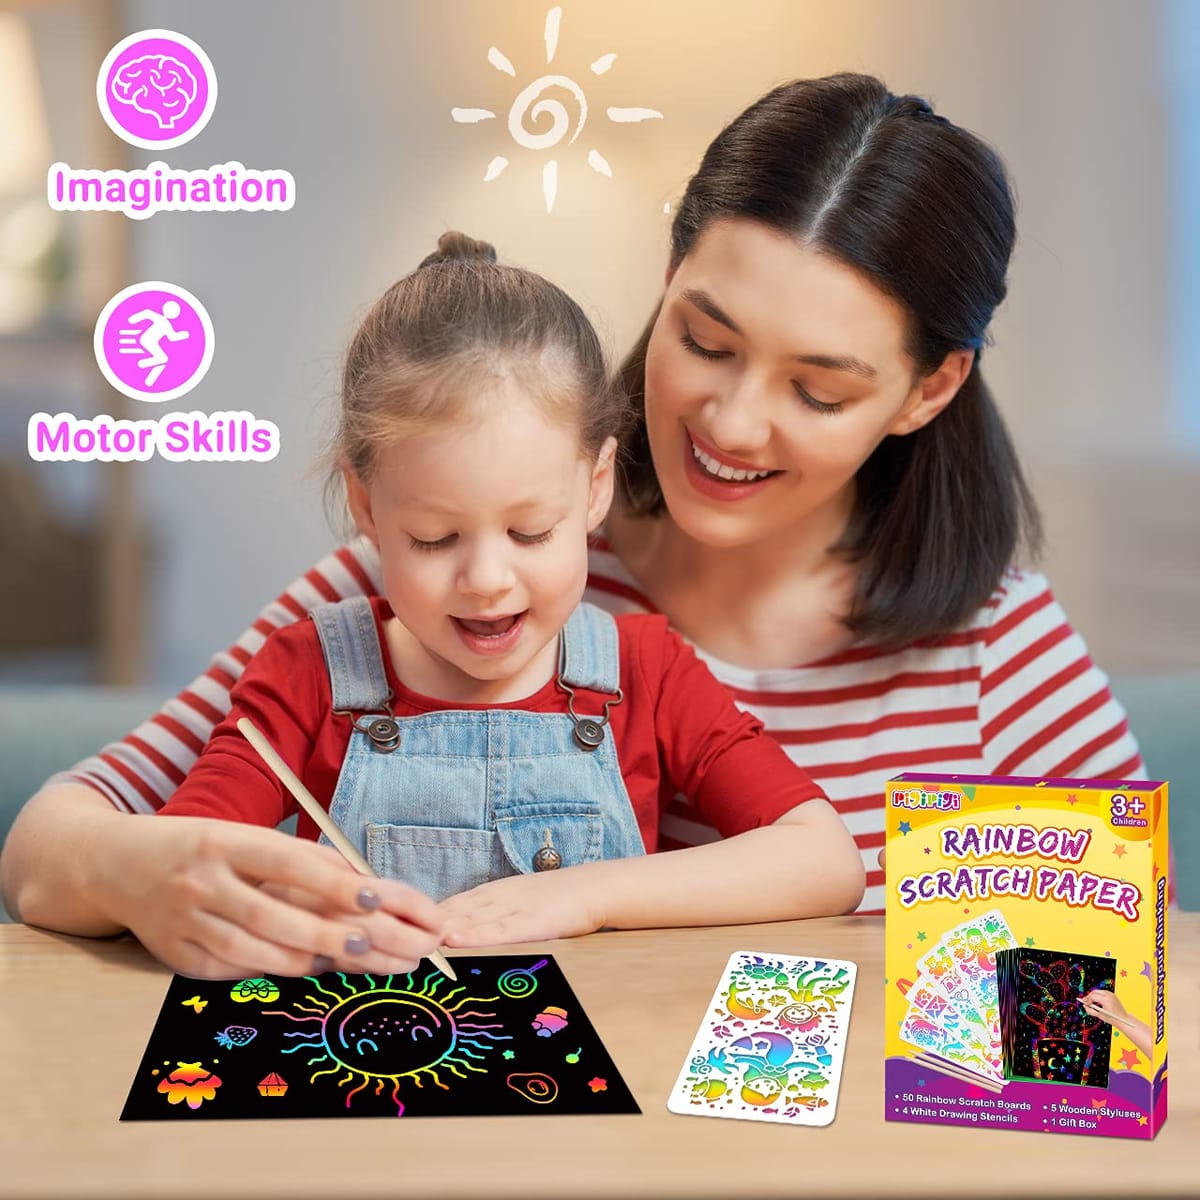 pigipigi Scratch Paper Art for Kids - 59 Pcs Magic Rainbow Scratch Paper Off Set Scratch Crafts Arts Supplies Kits Pads Sheets 2